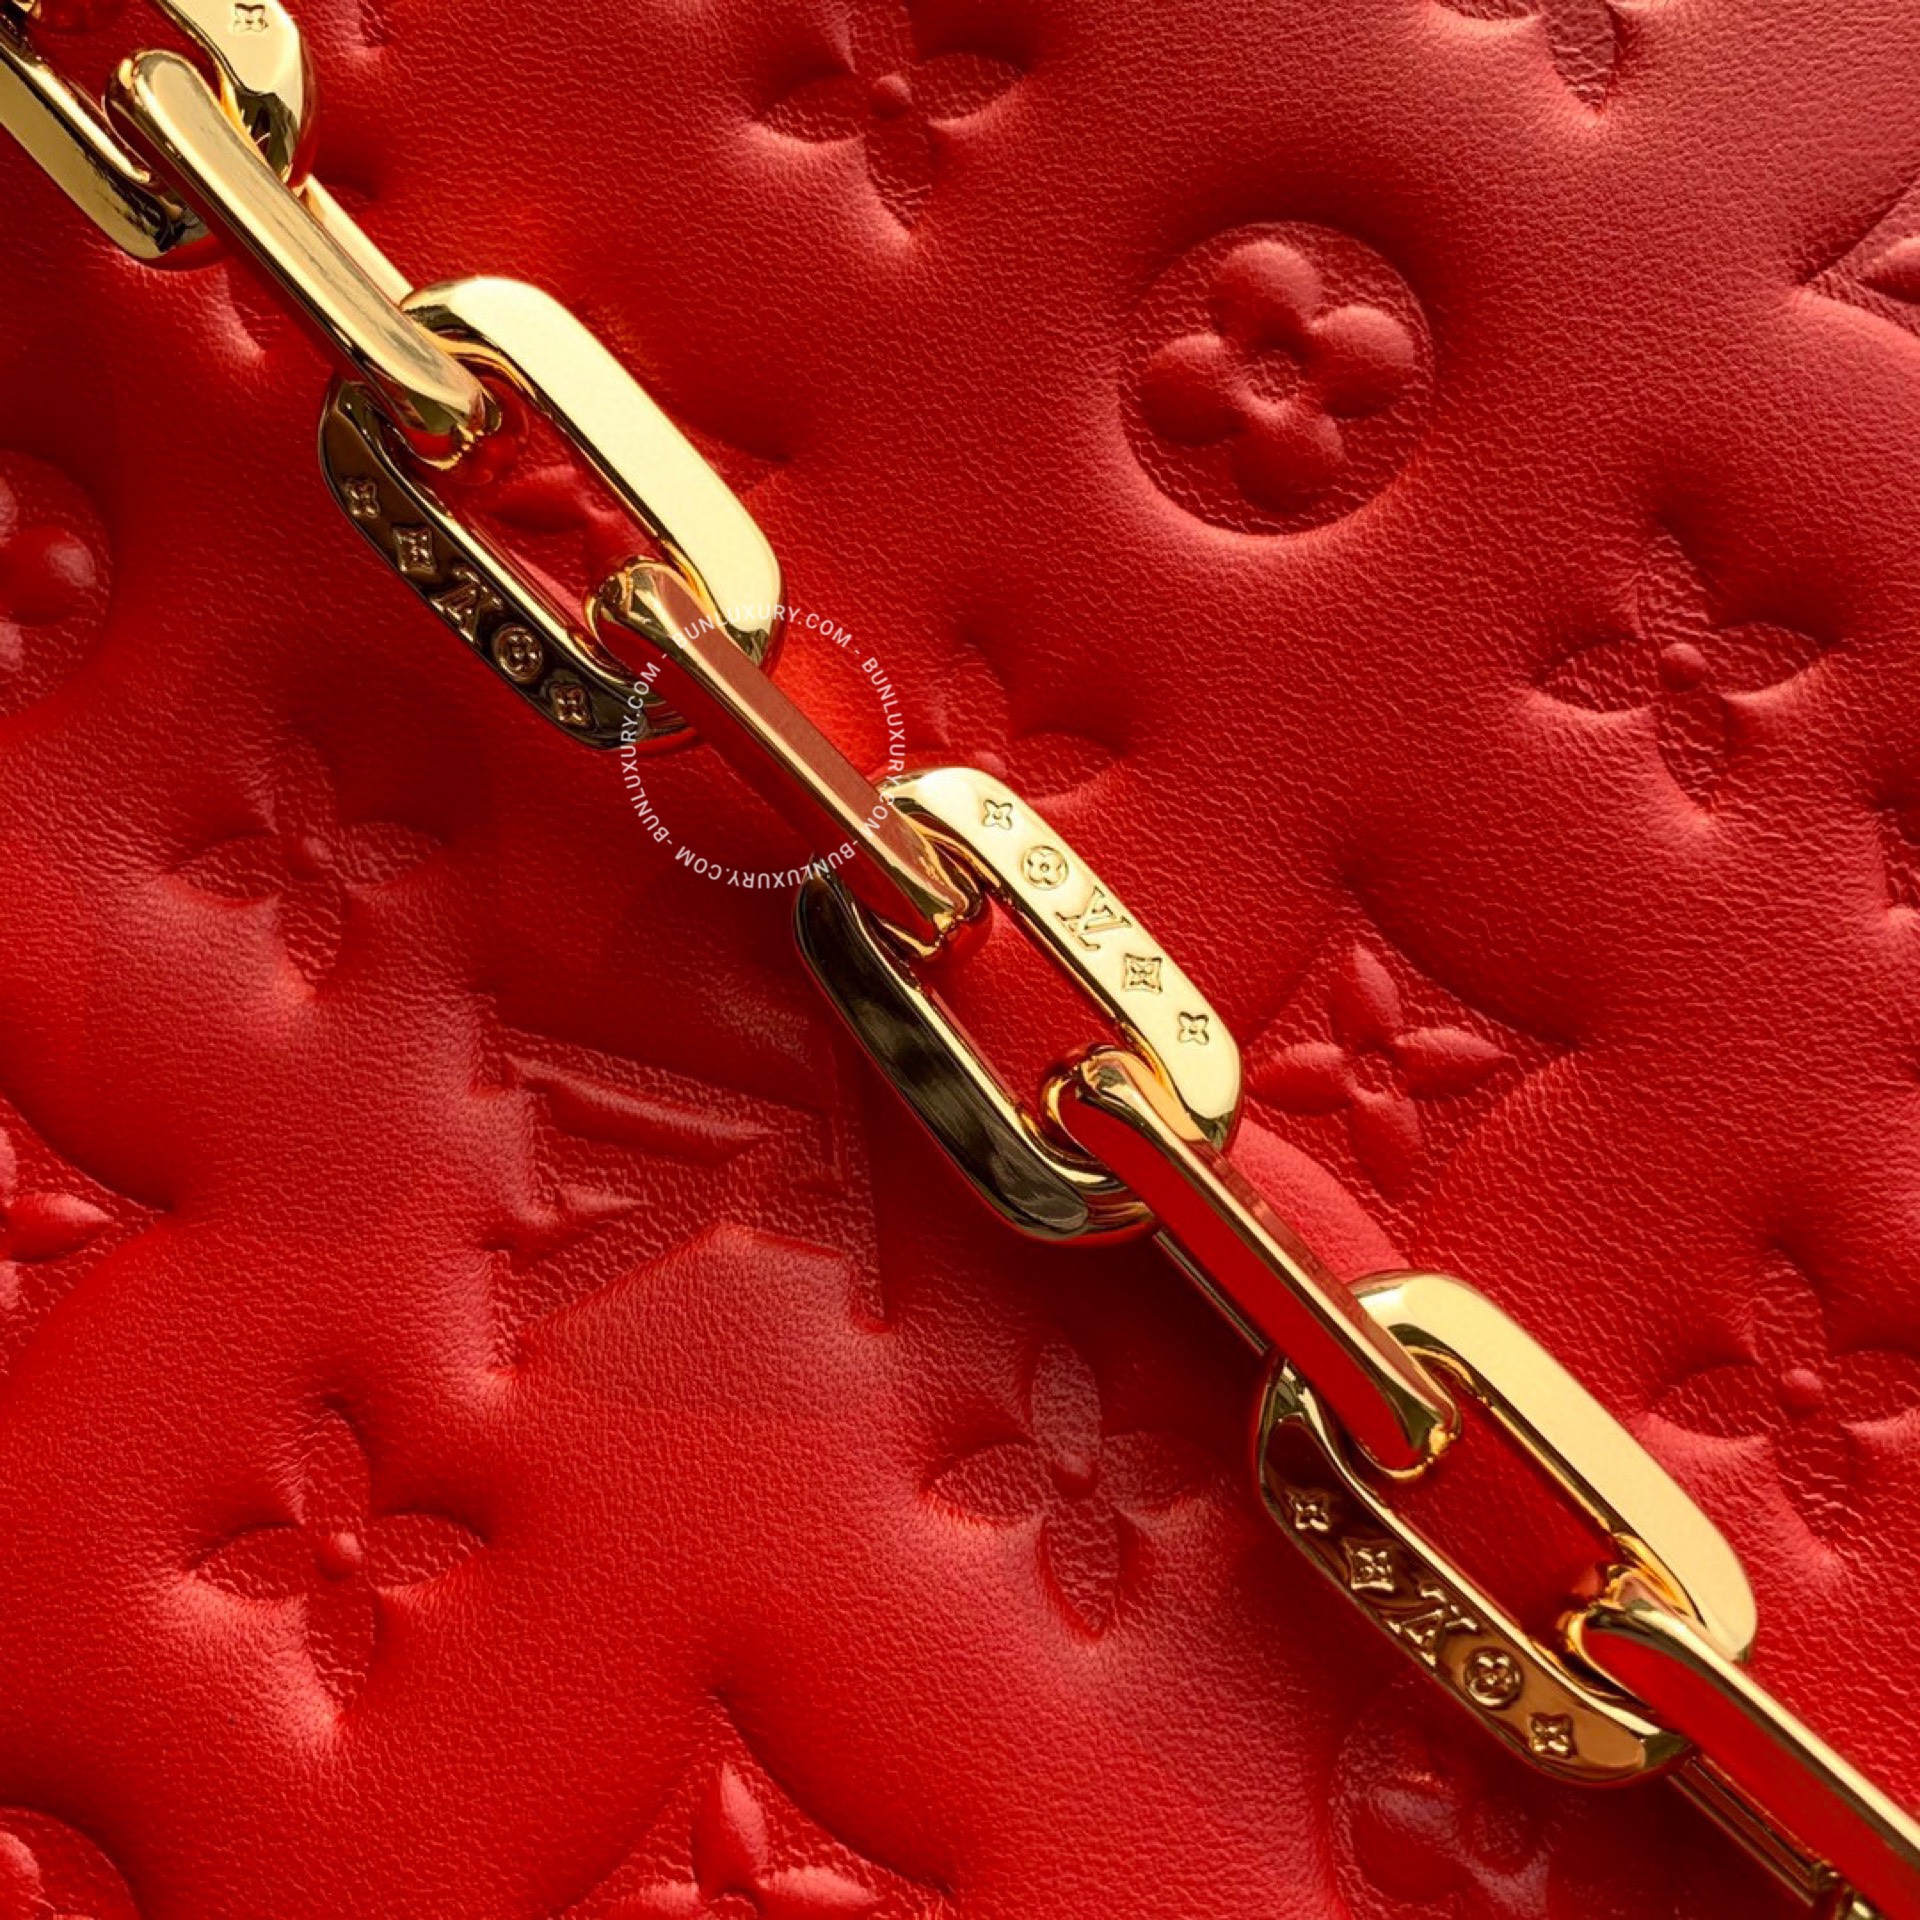 Túi xách Louis Vuitton Coussin Pm Monogram Red M57792